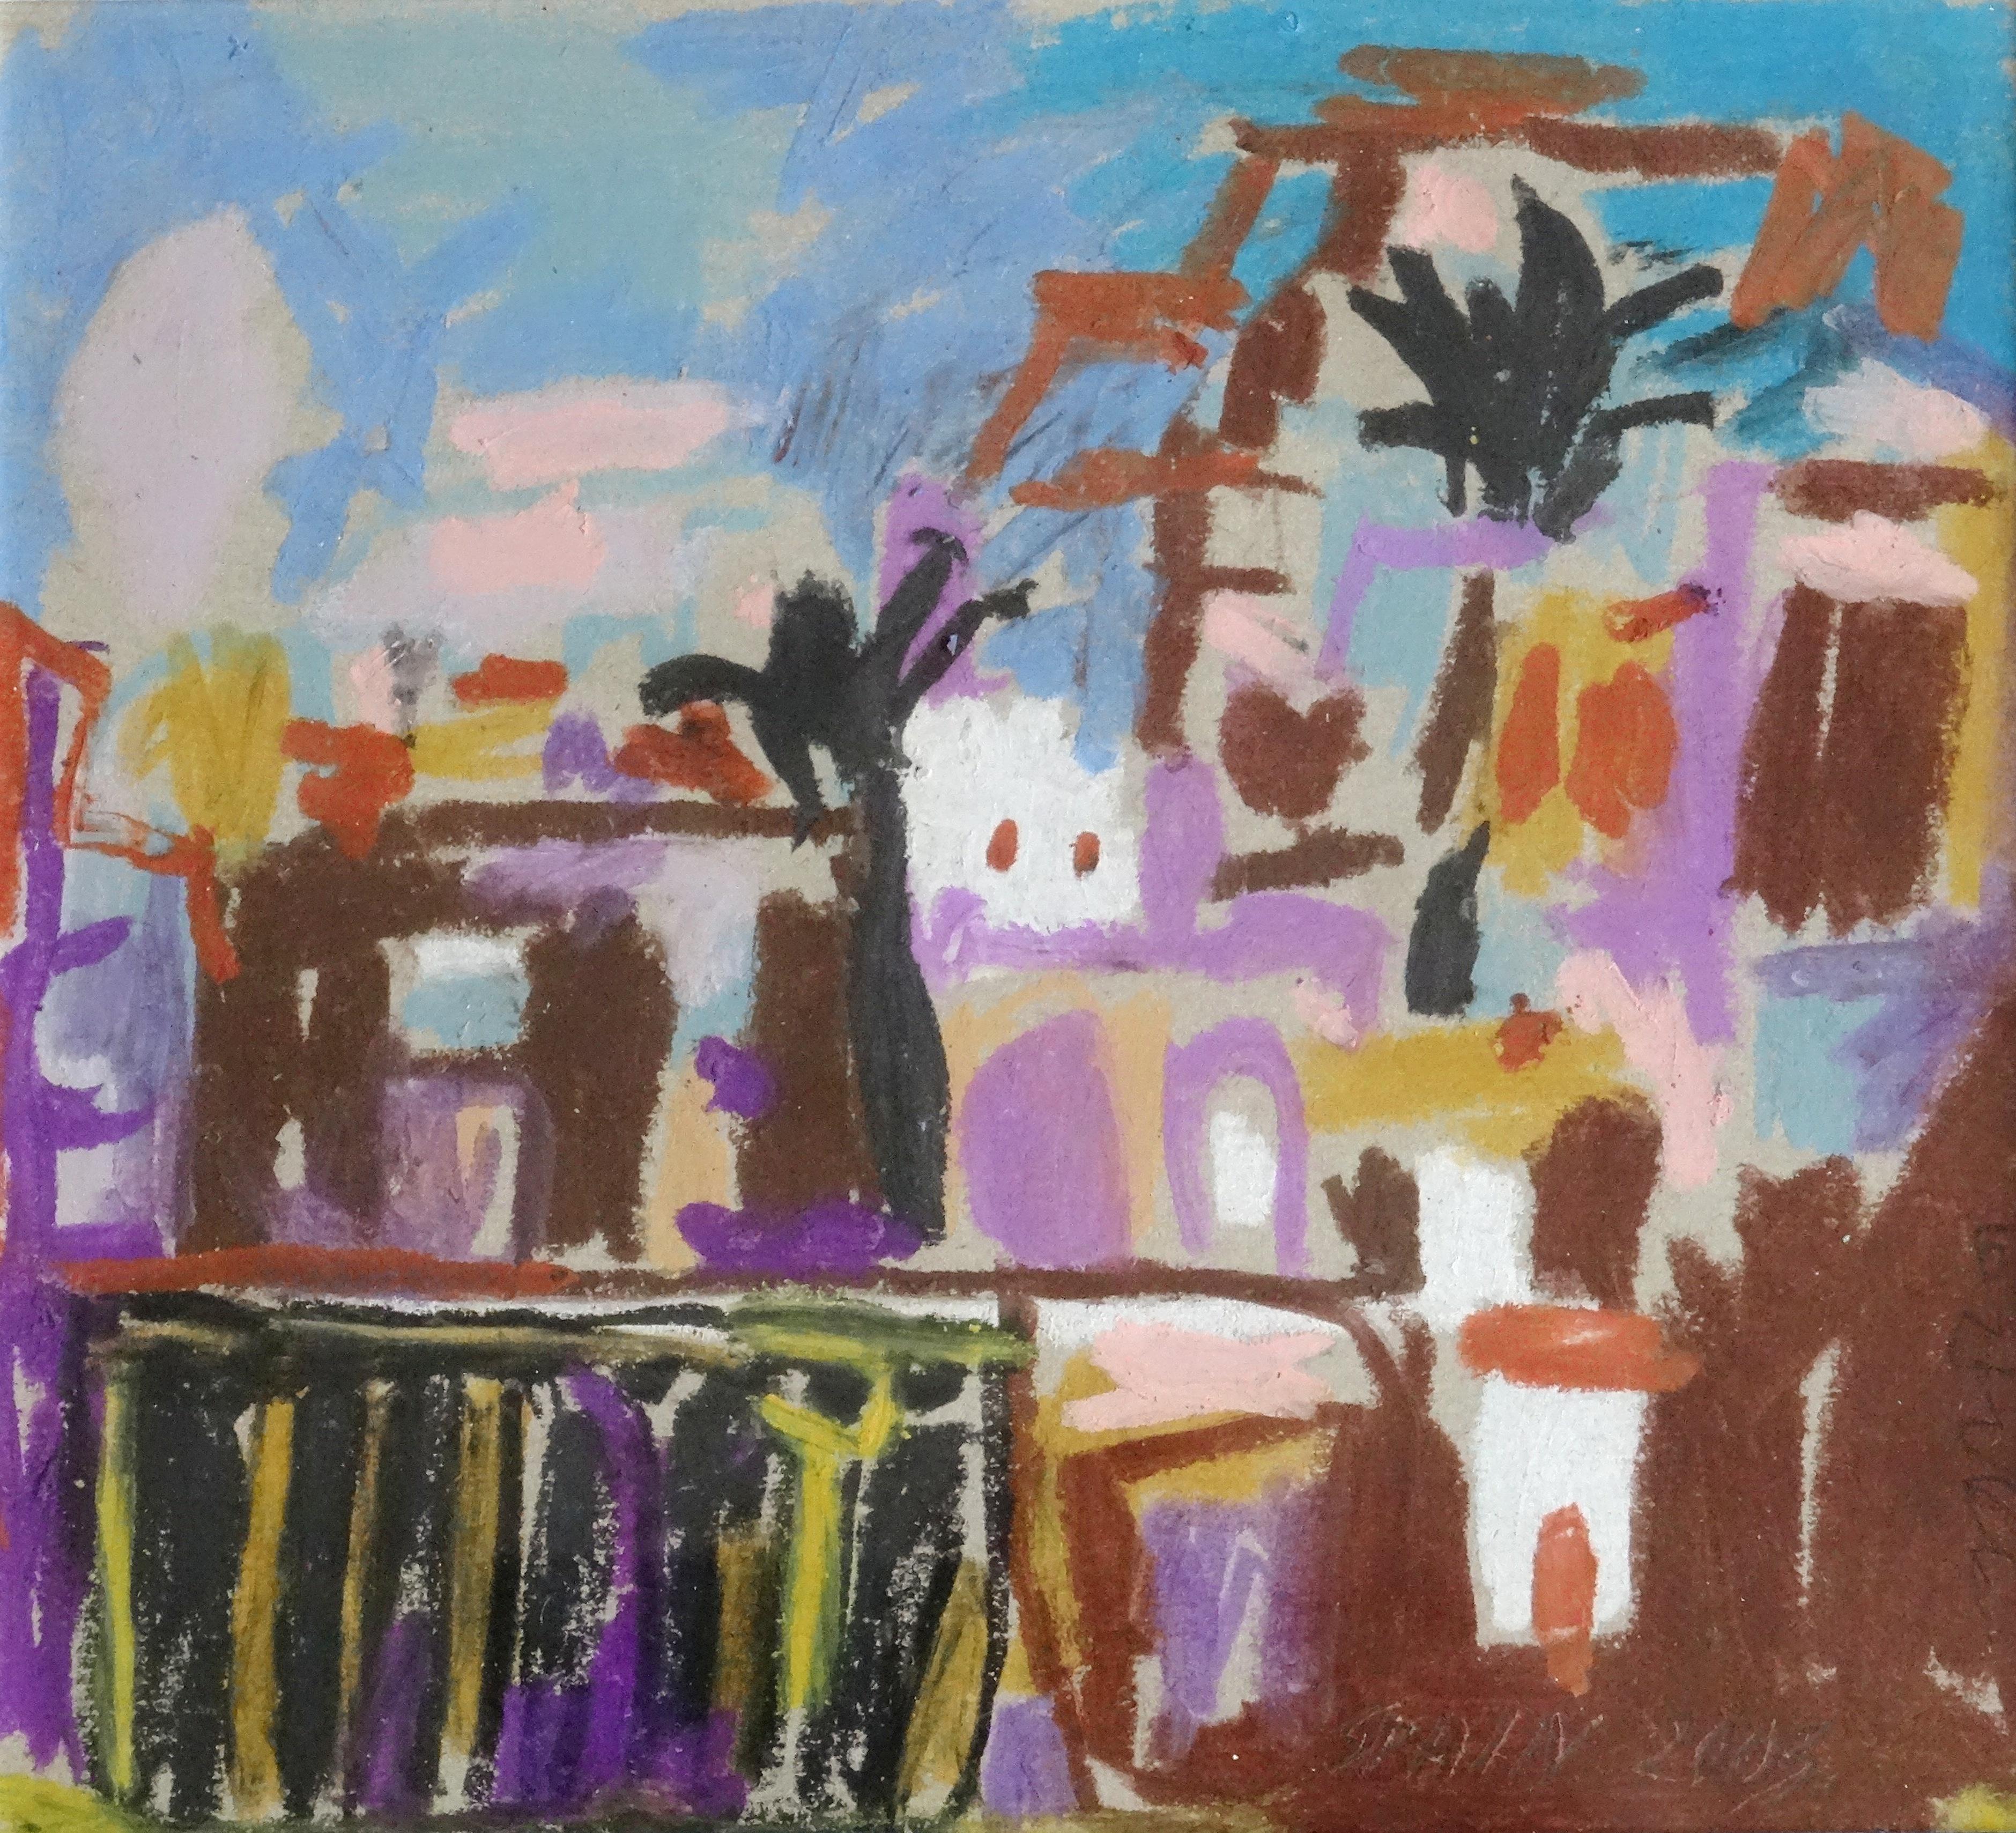 Valencia. 2003, pastel on paper, 17x19 cm